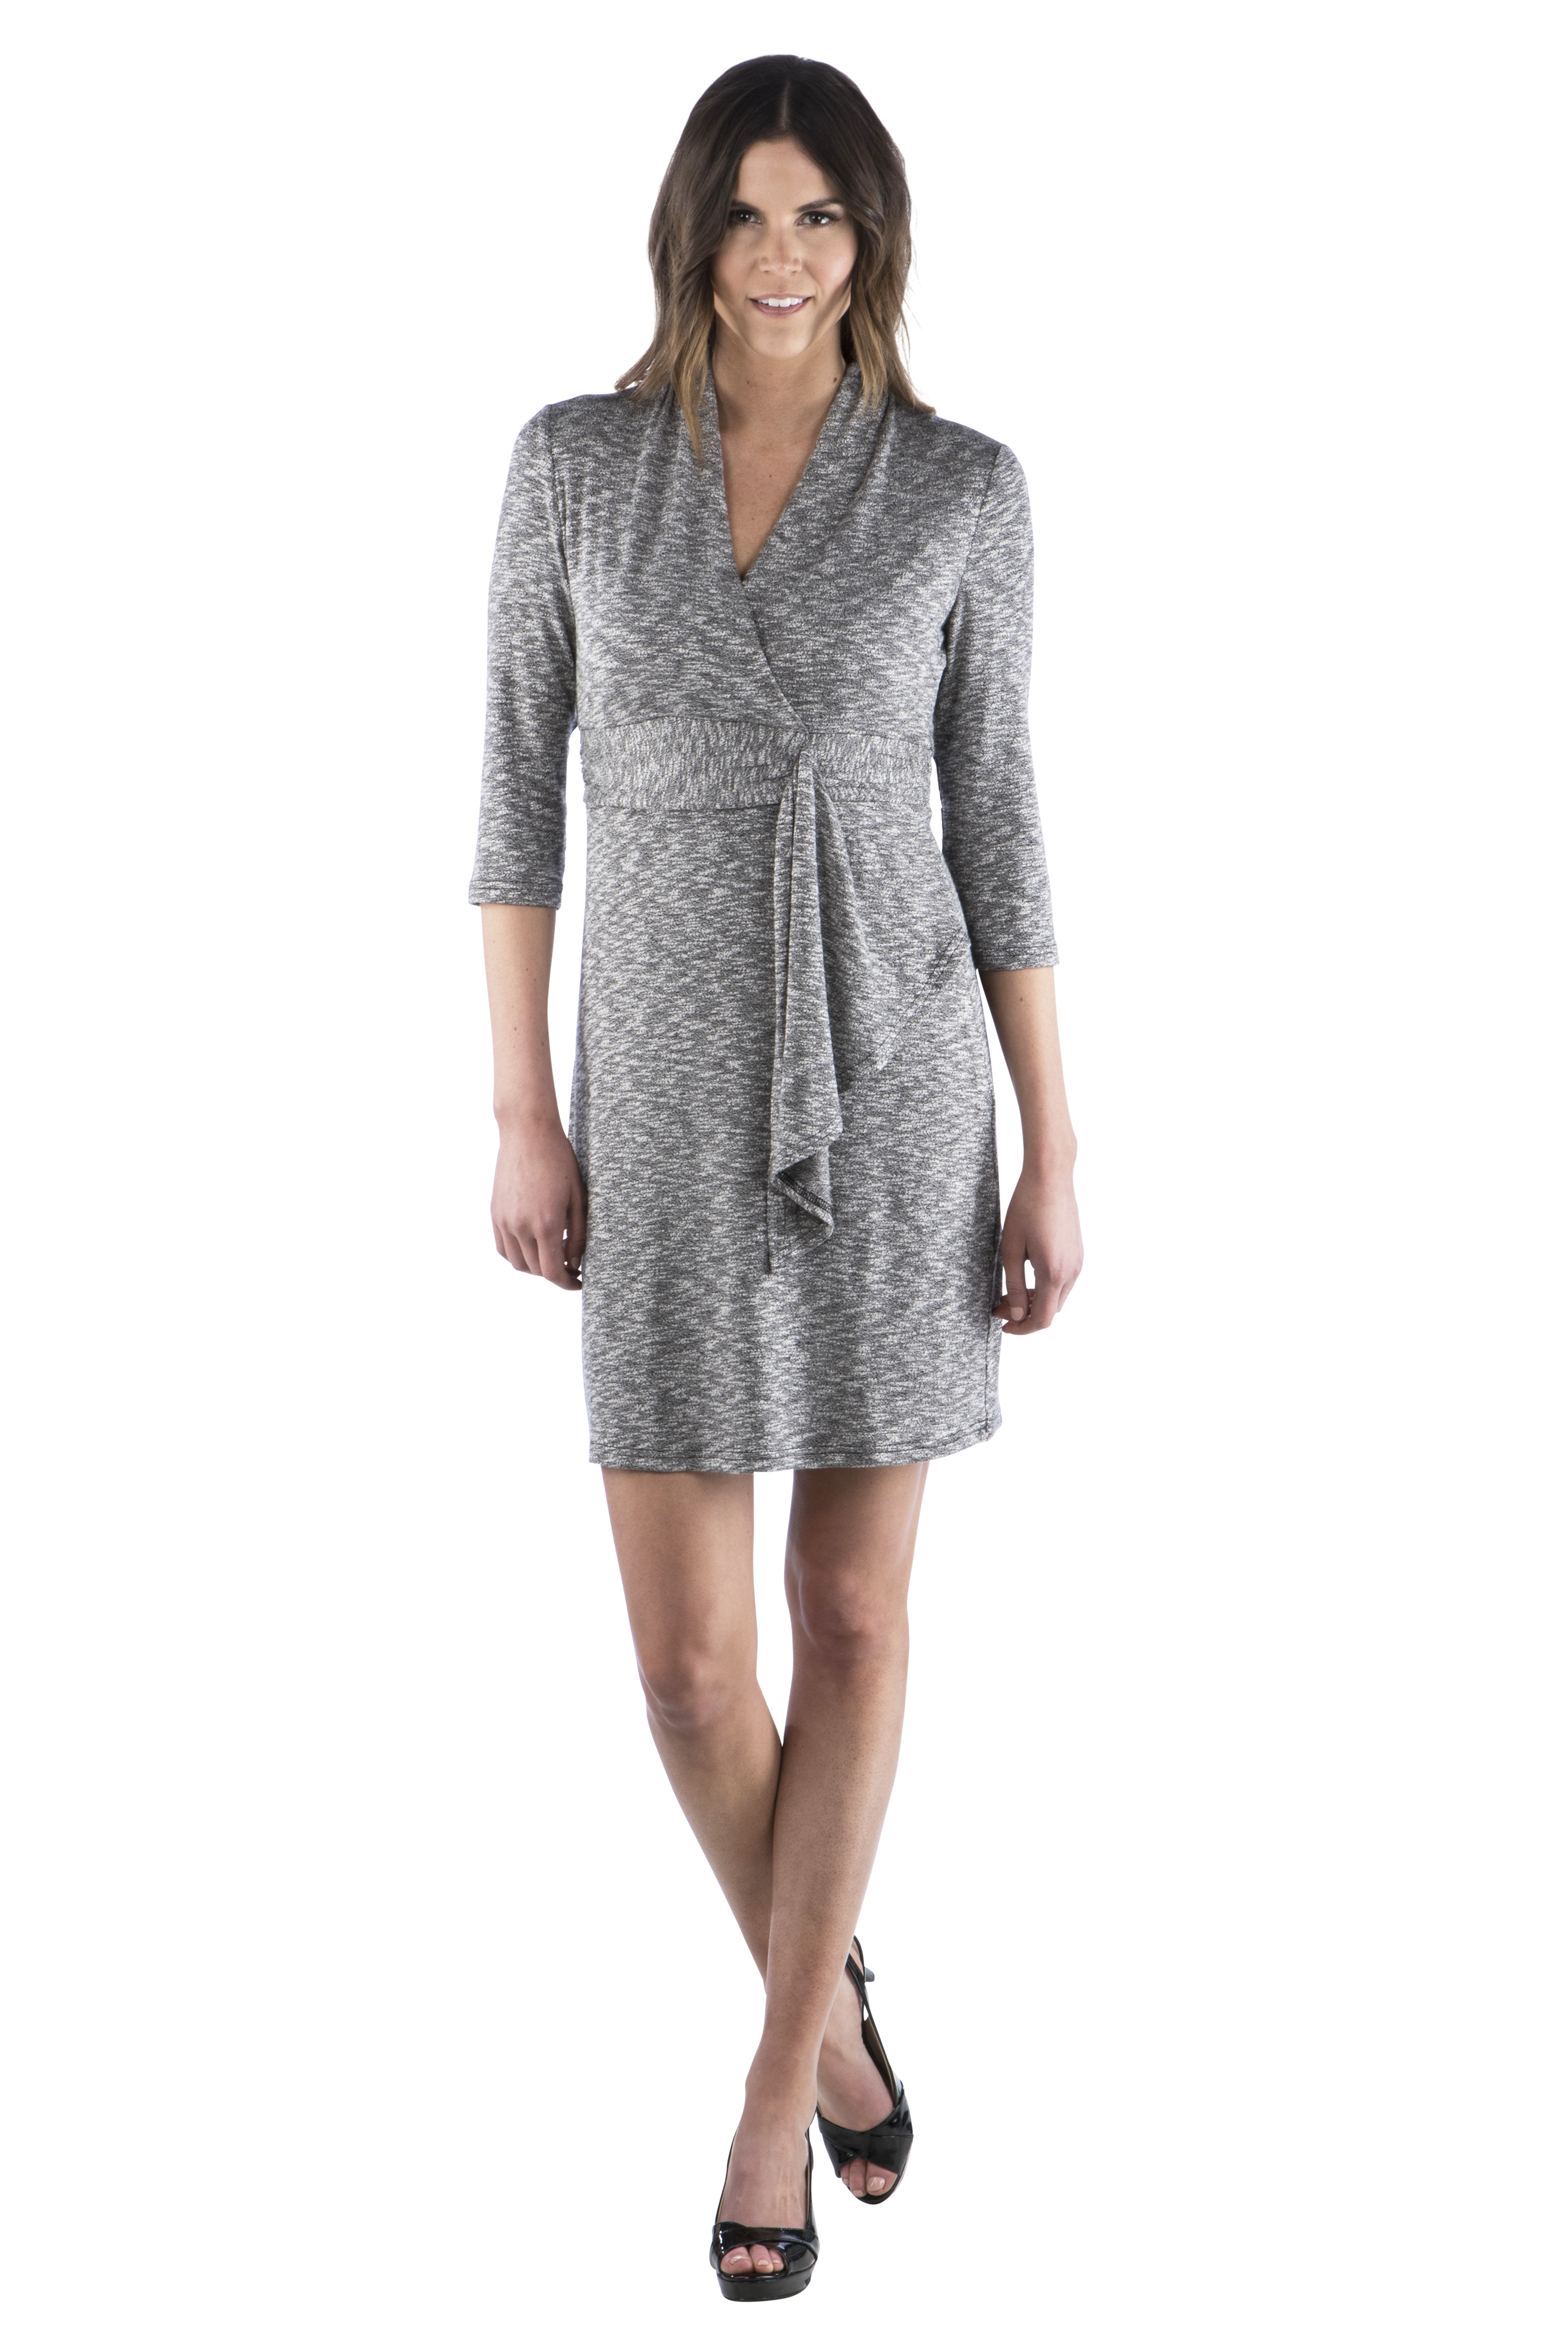 Gray Sweater Dress - Jade